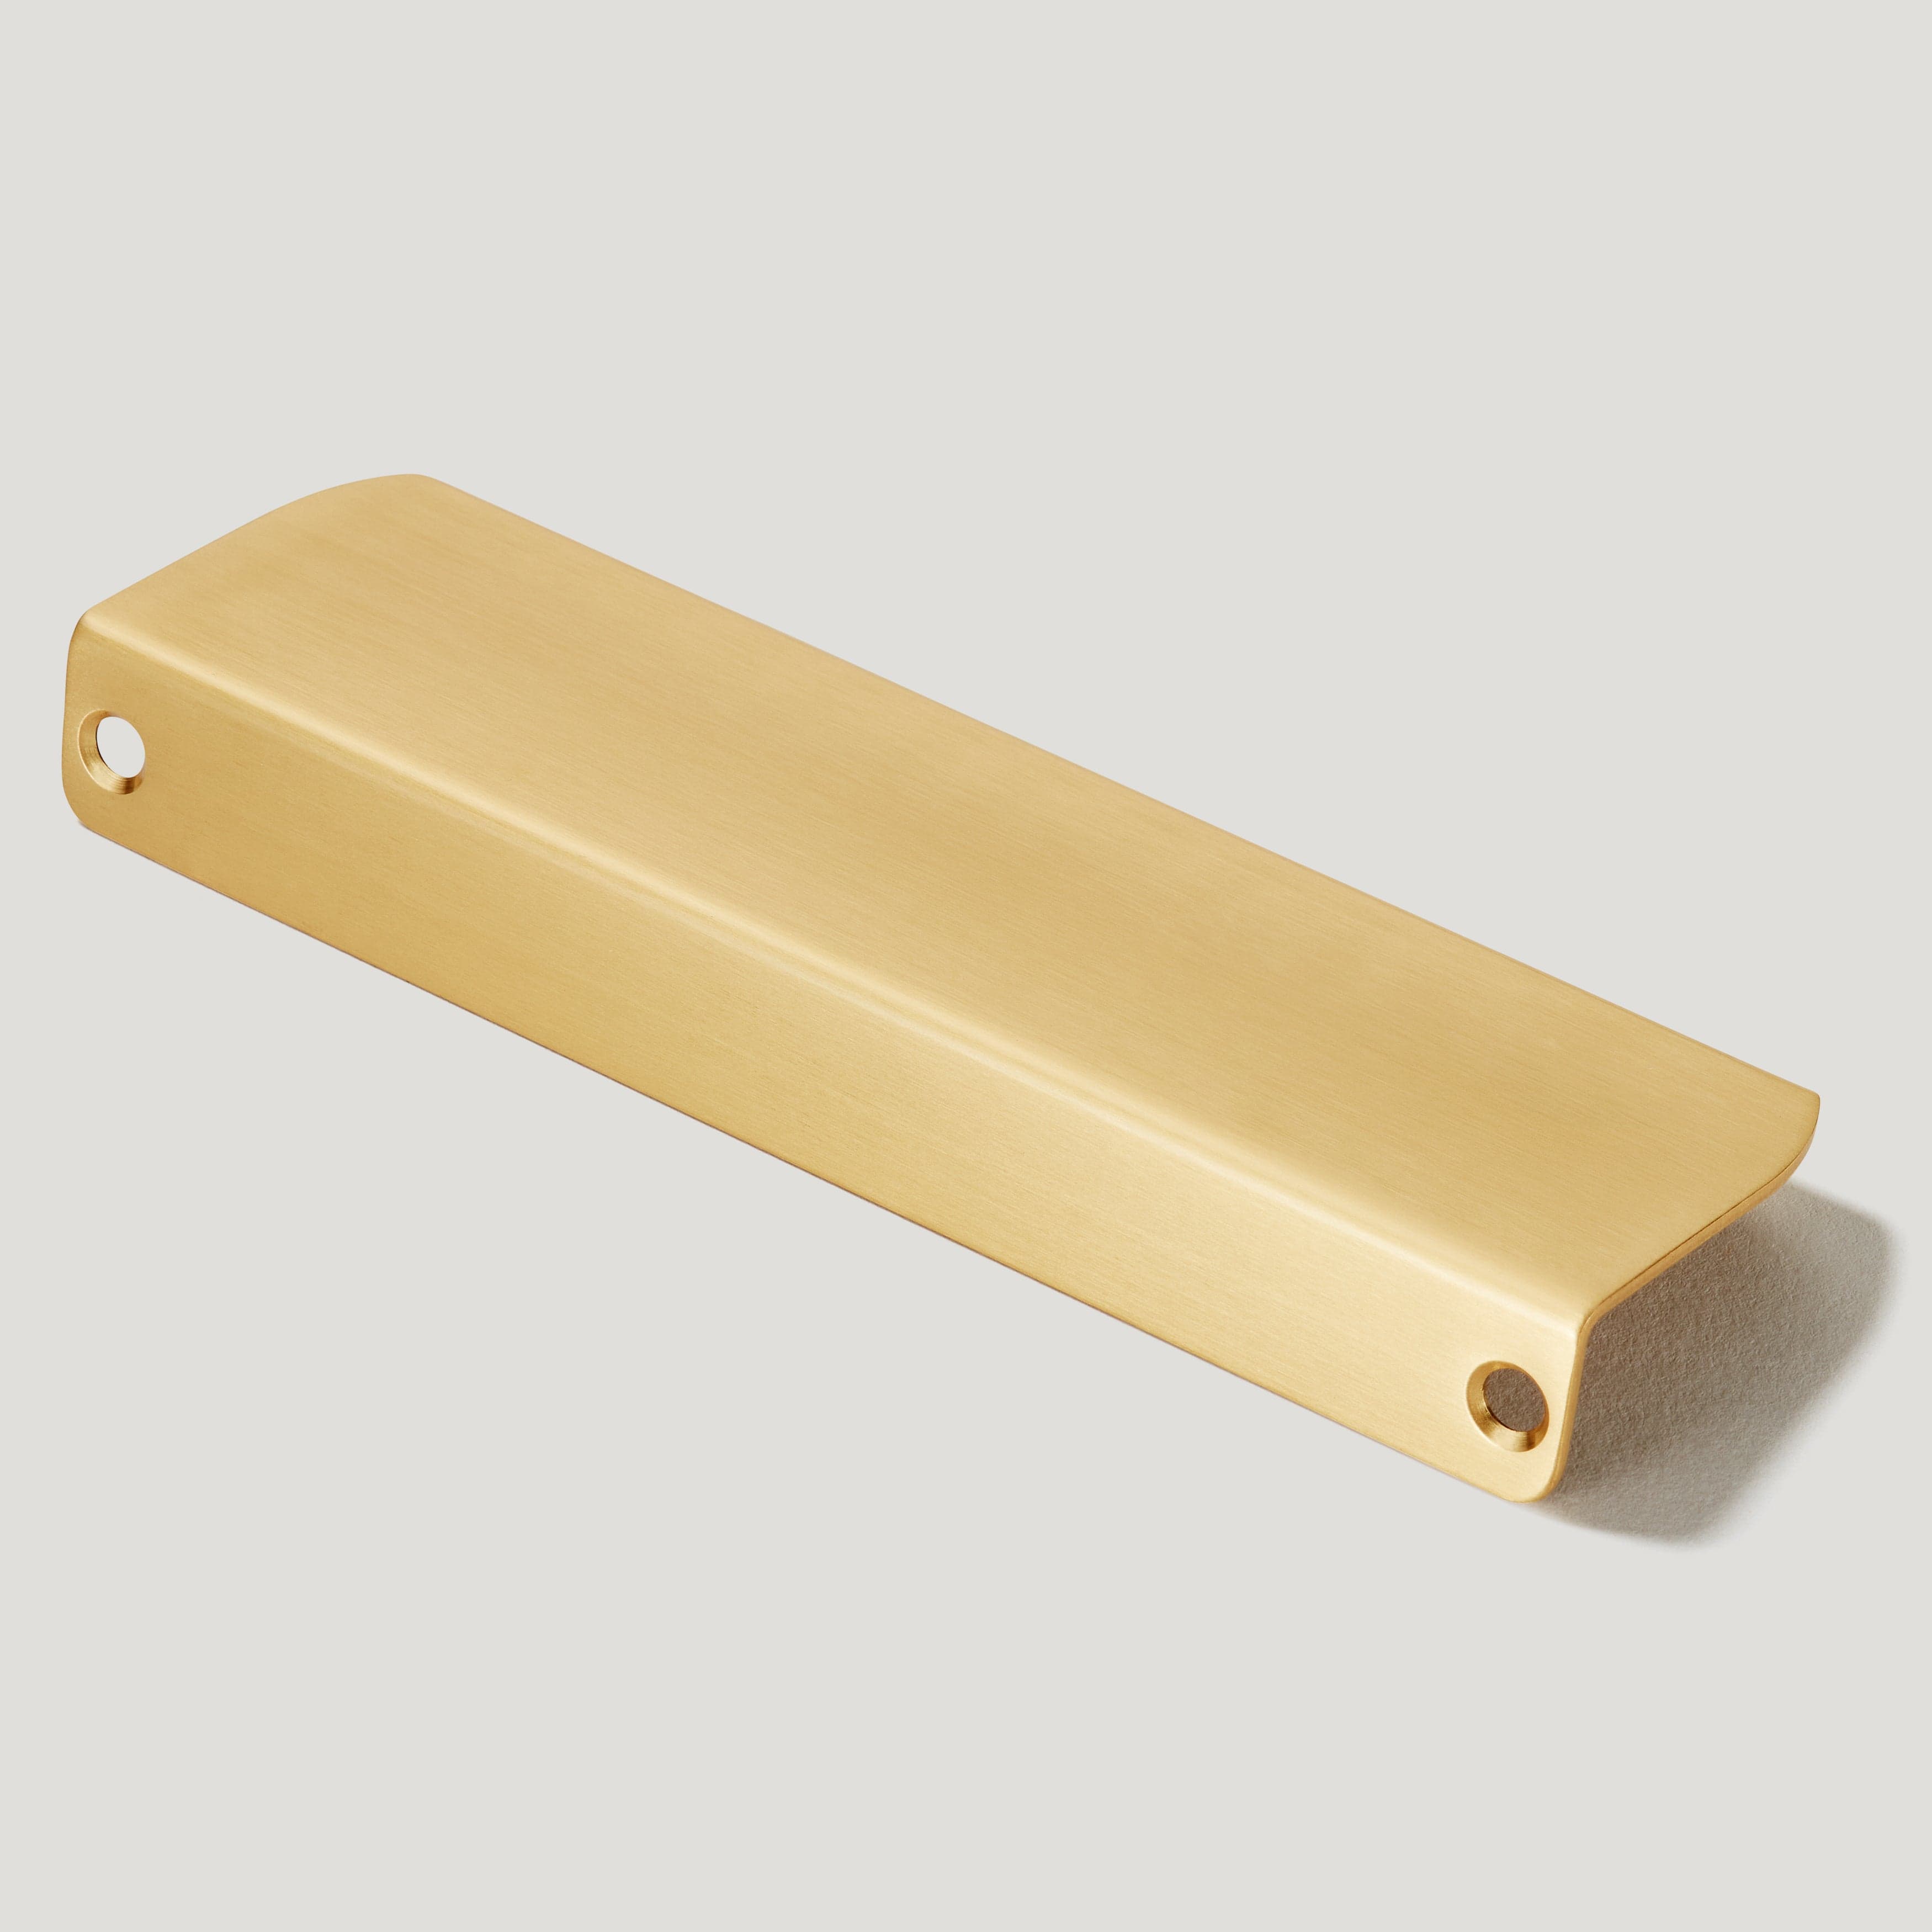 Plank Hardware Handles & Knobs JUDD Edge Pull Handle - Brass